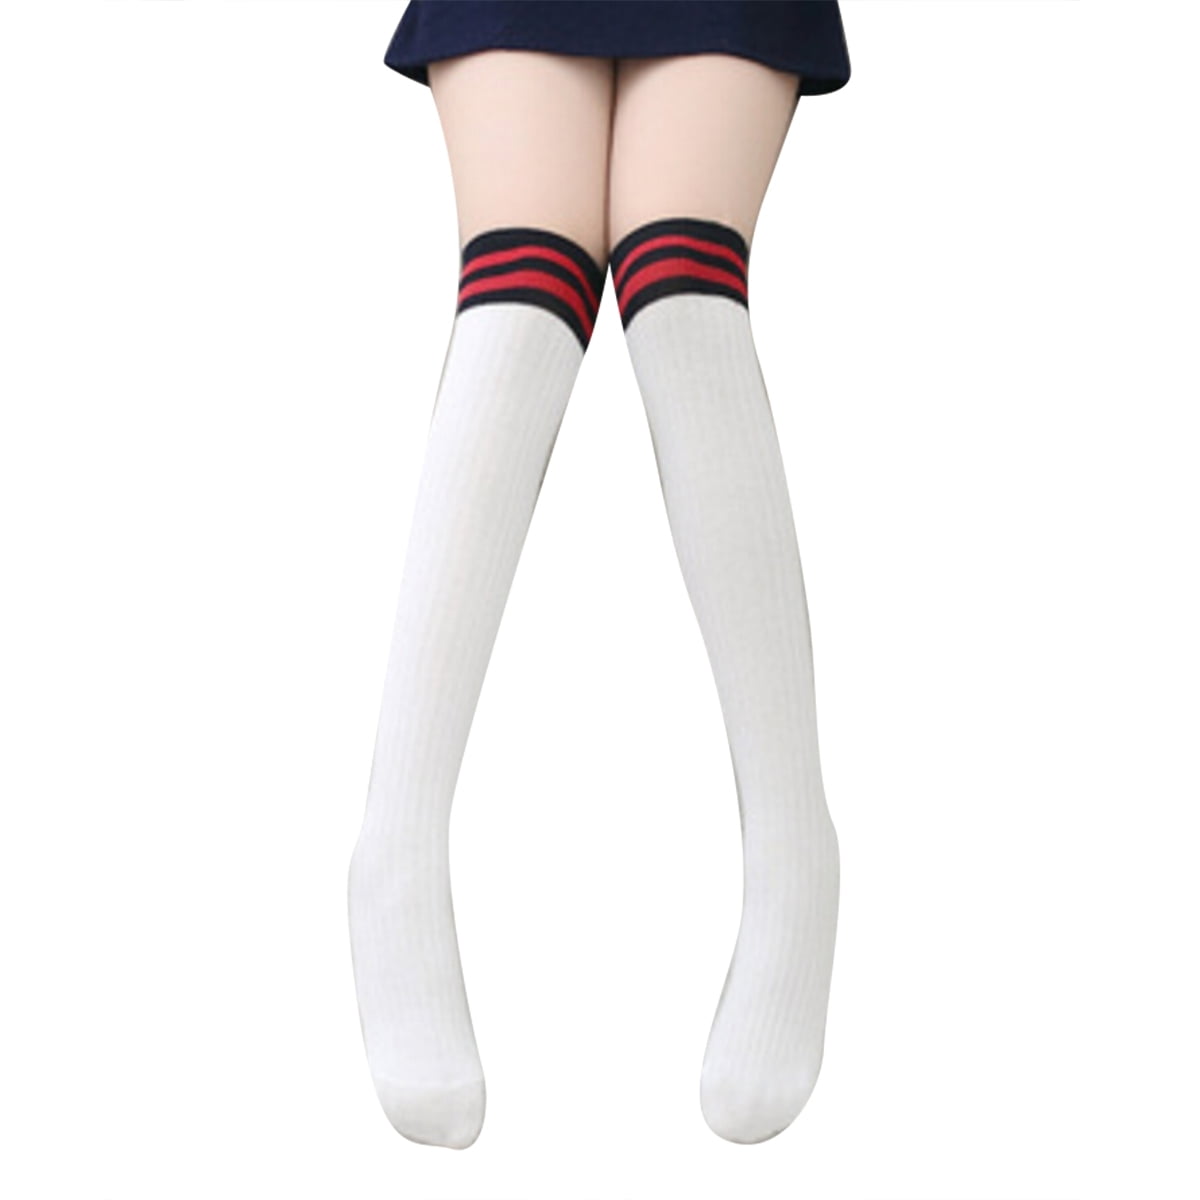 Women Crew Socks Thigh High Knee Cat Sheets Long Tube Dress Legging Casual Compression Stocking